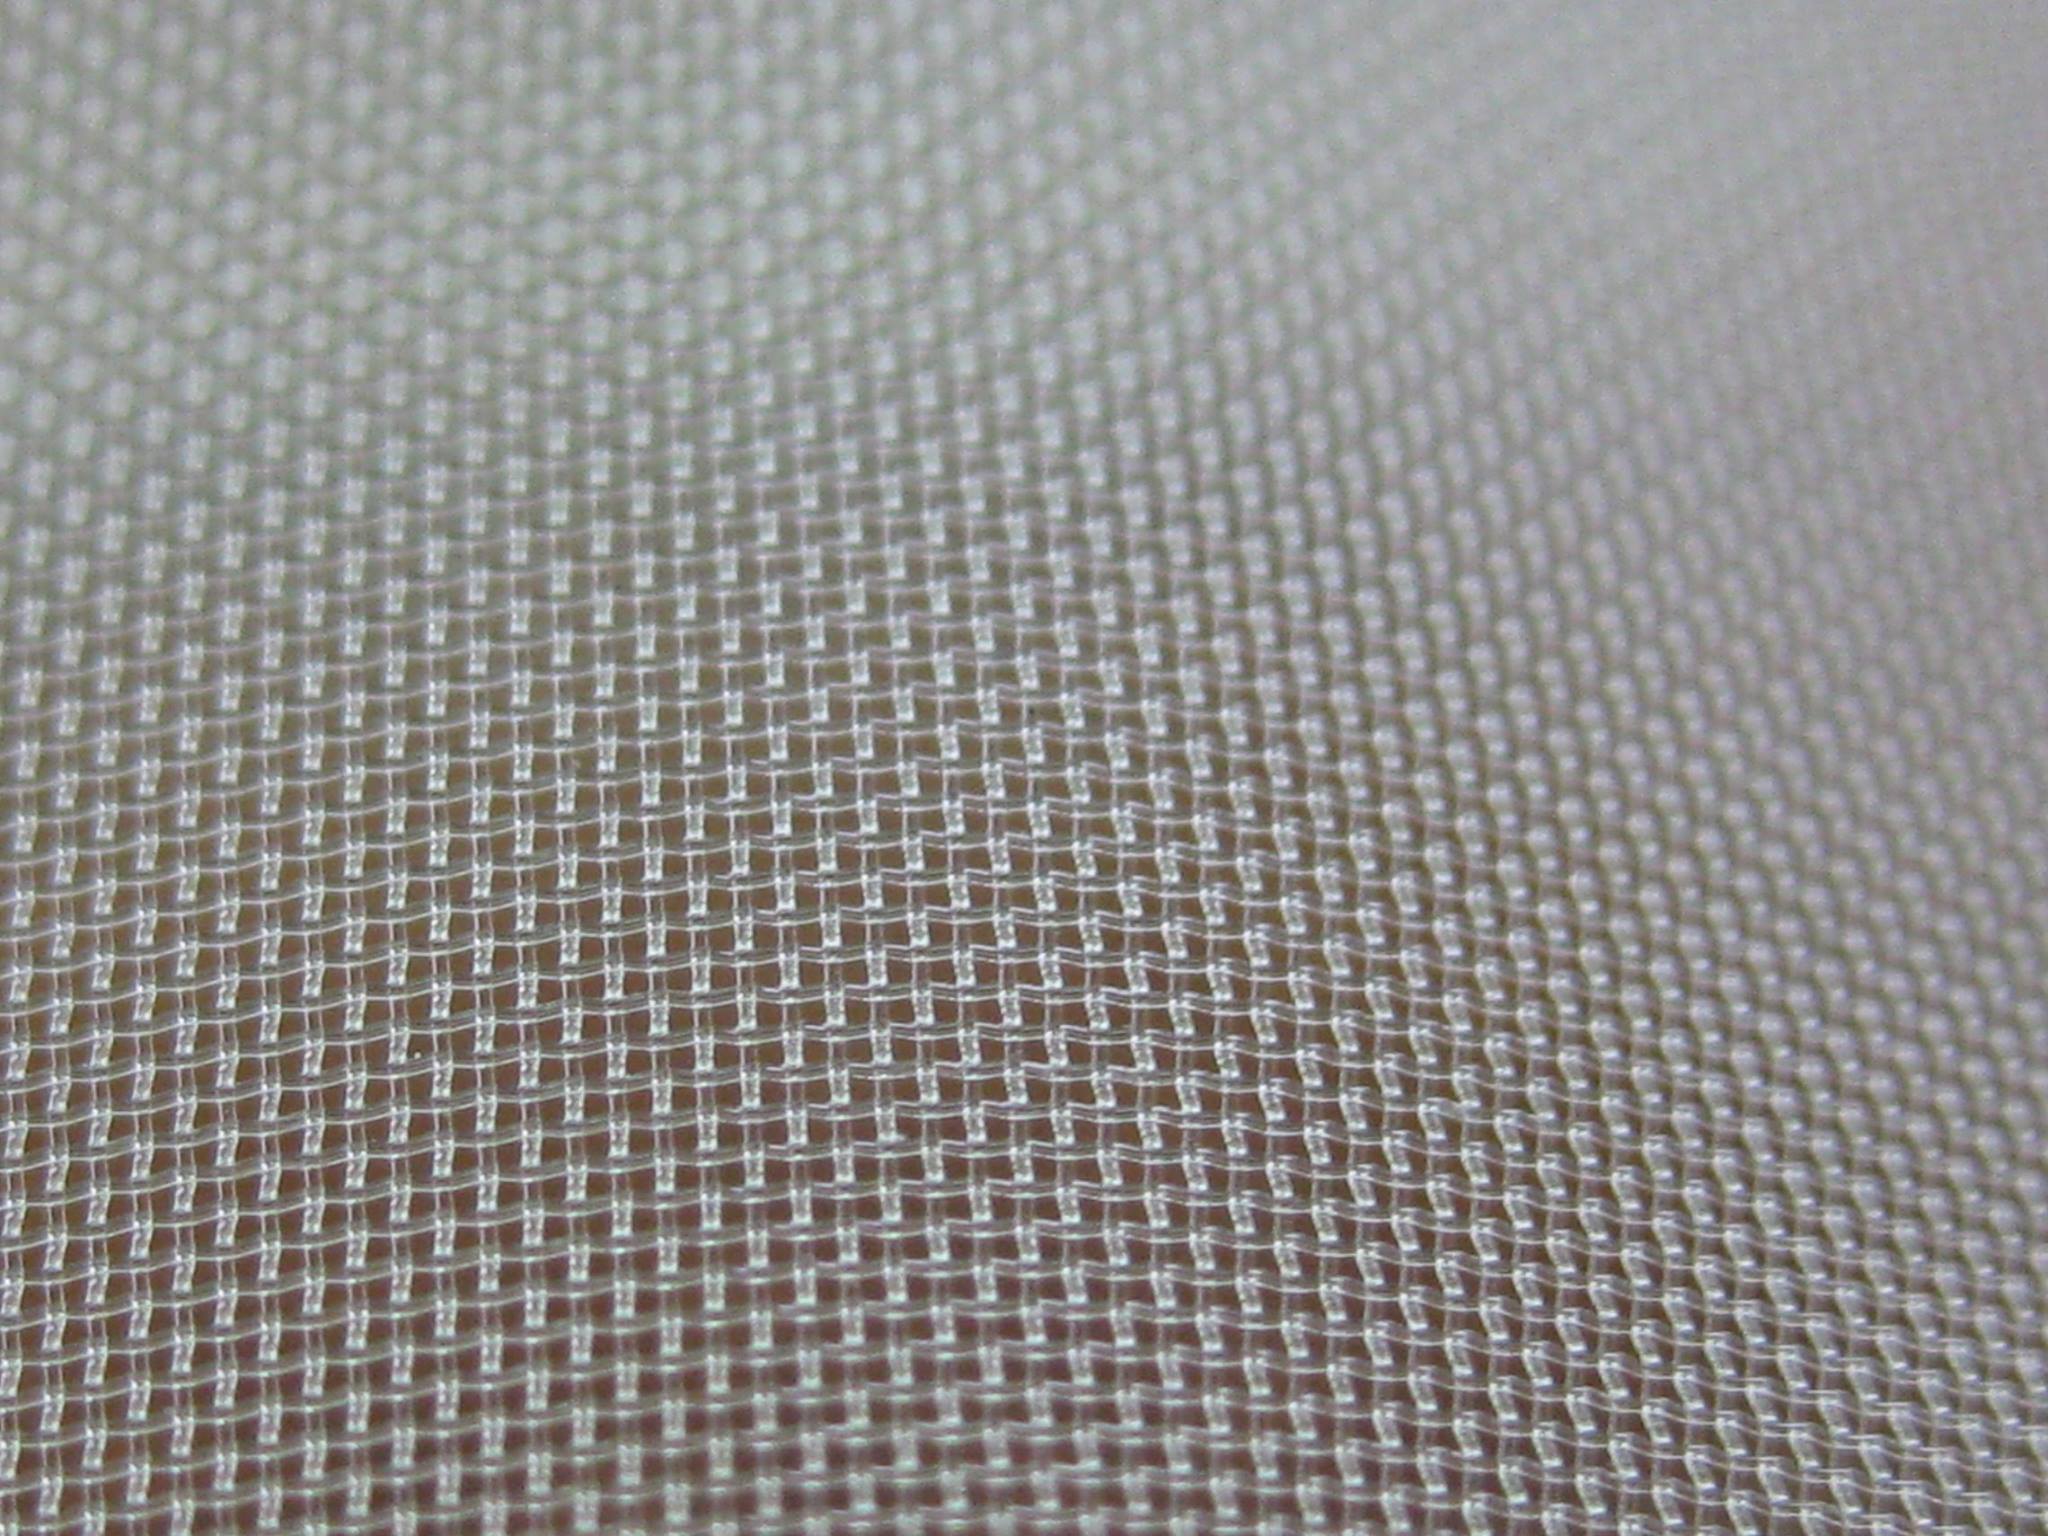 Nylon Filter Cloth. Code: JPP20 (350µm). Mesh opening -350µm. Mesh count (mesh/cm) -20 T. Thread Ø -150µm. Weight -98g/m2. Width -127cm